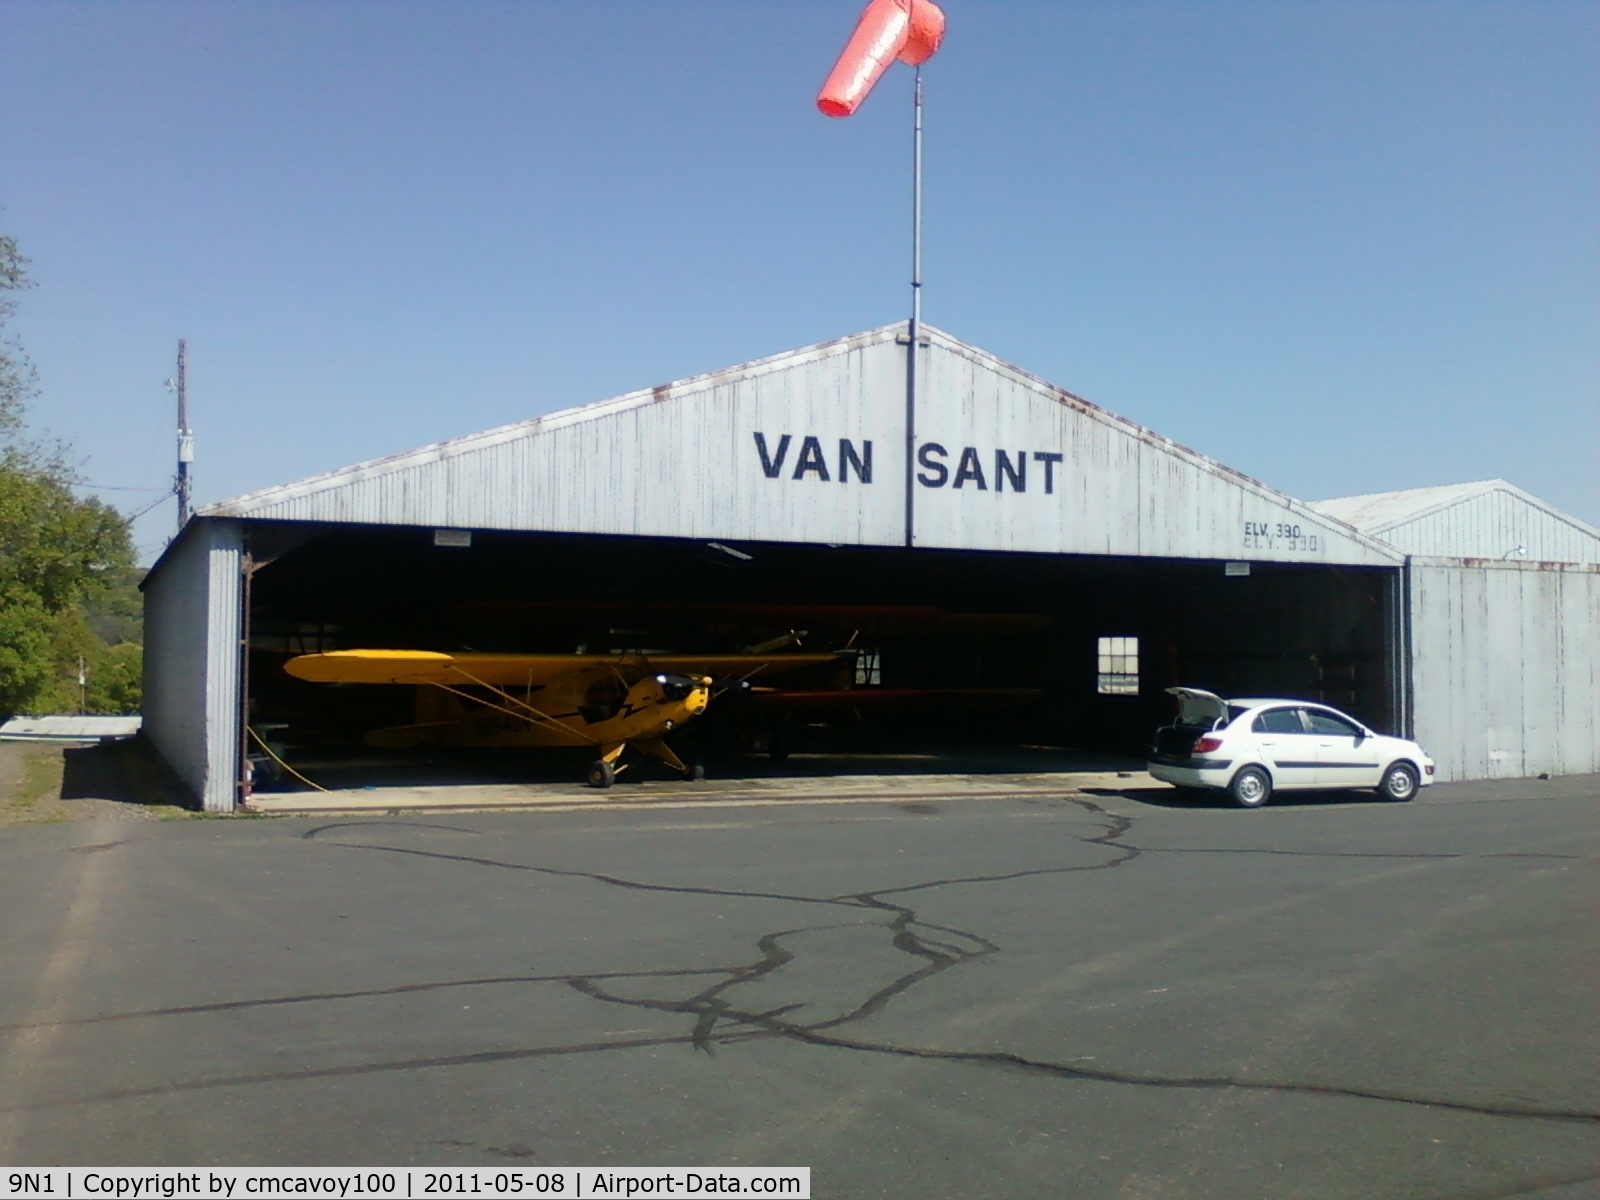 Vansant Airport (9N1) - Hanger shot